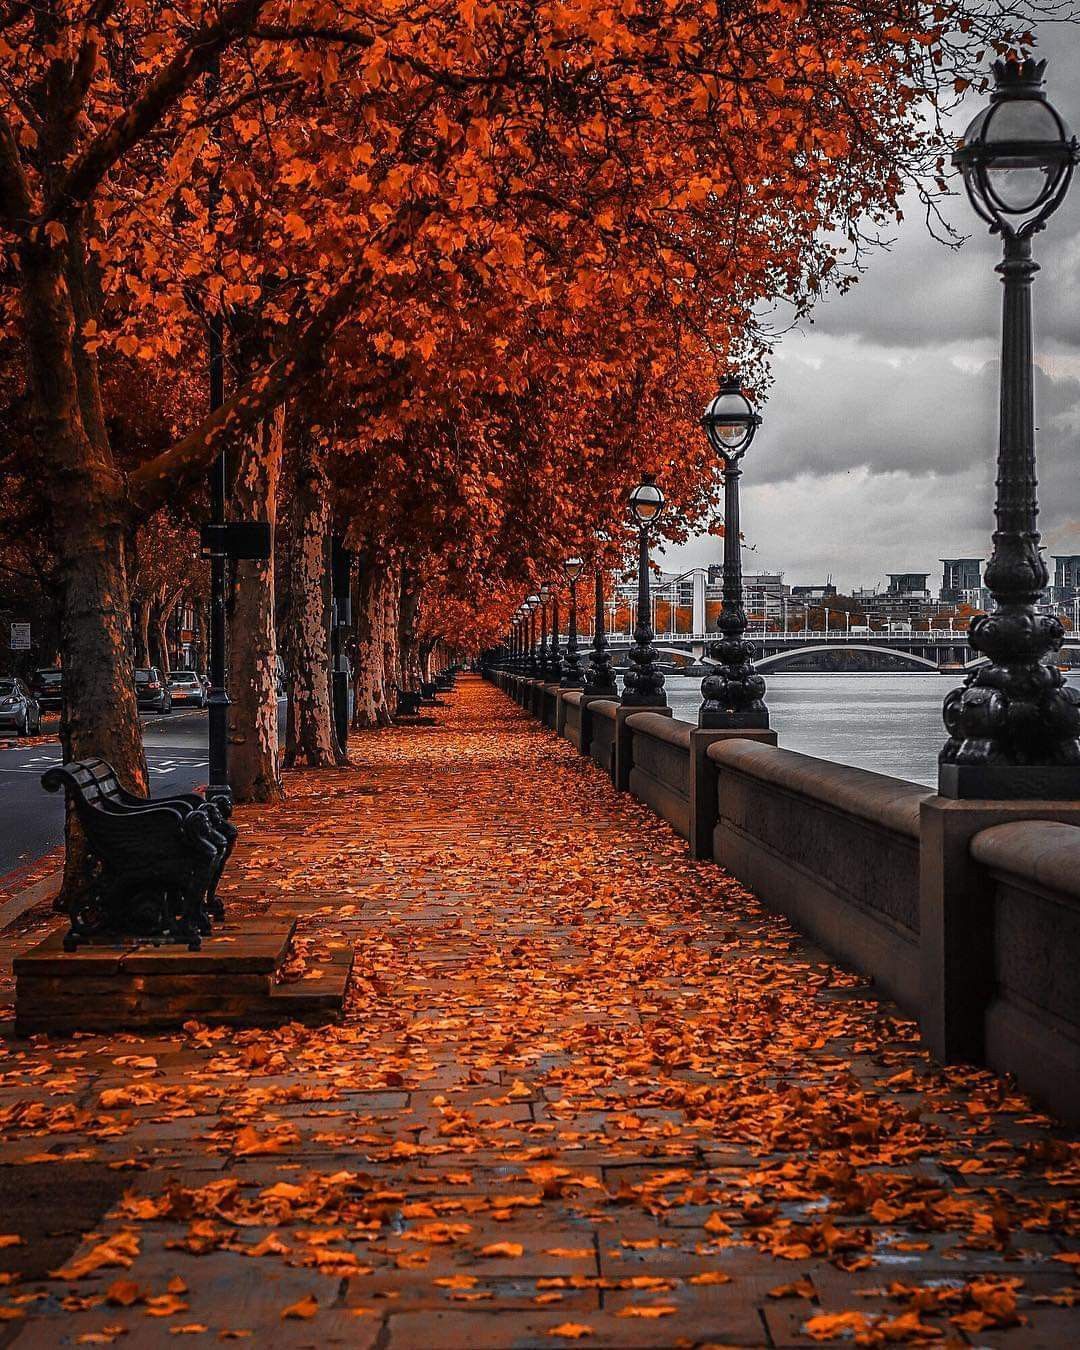 Autumn in London. Autumn photography, Autumn scenery, Fall picture